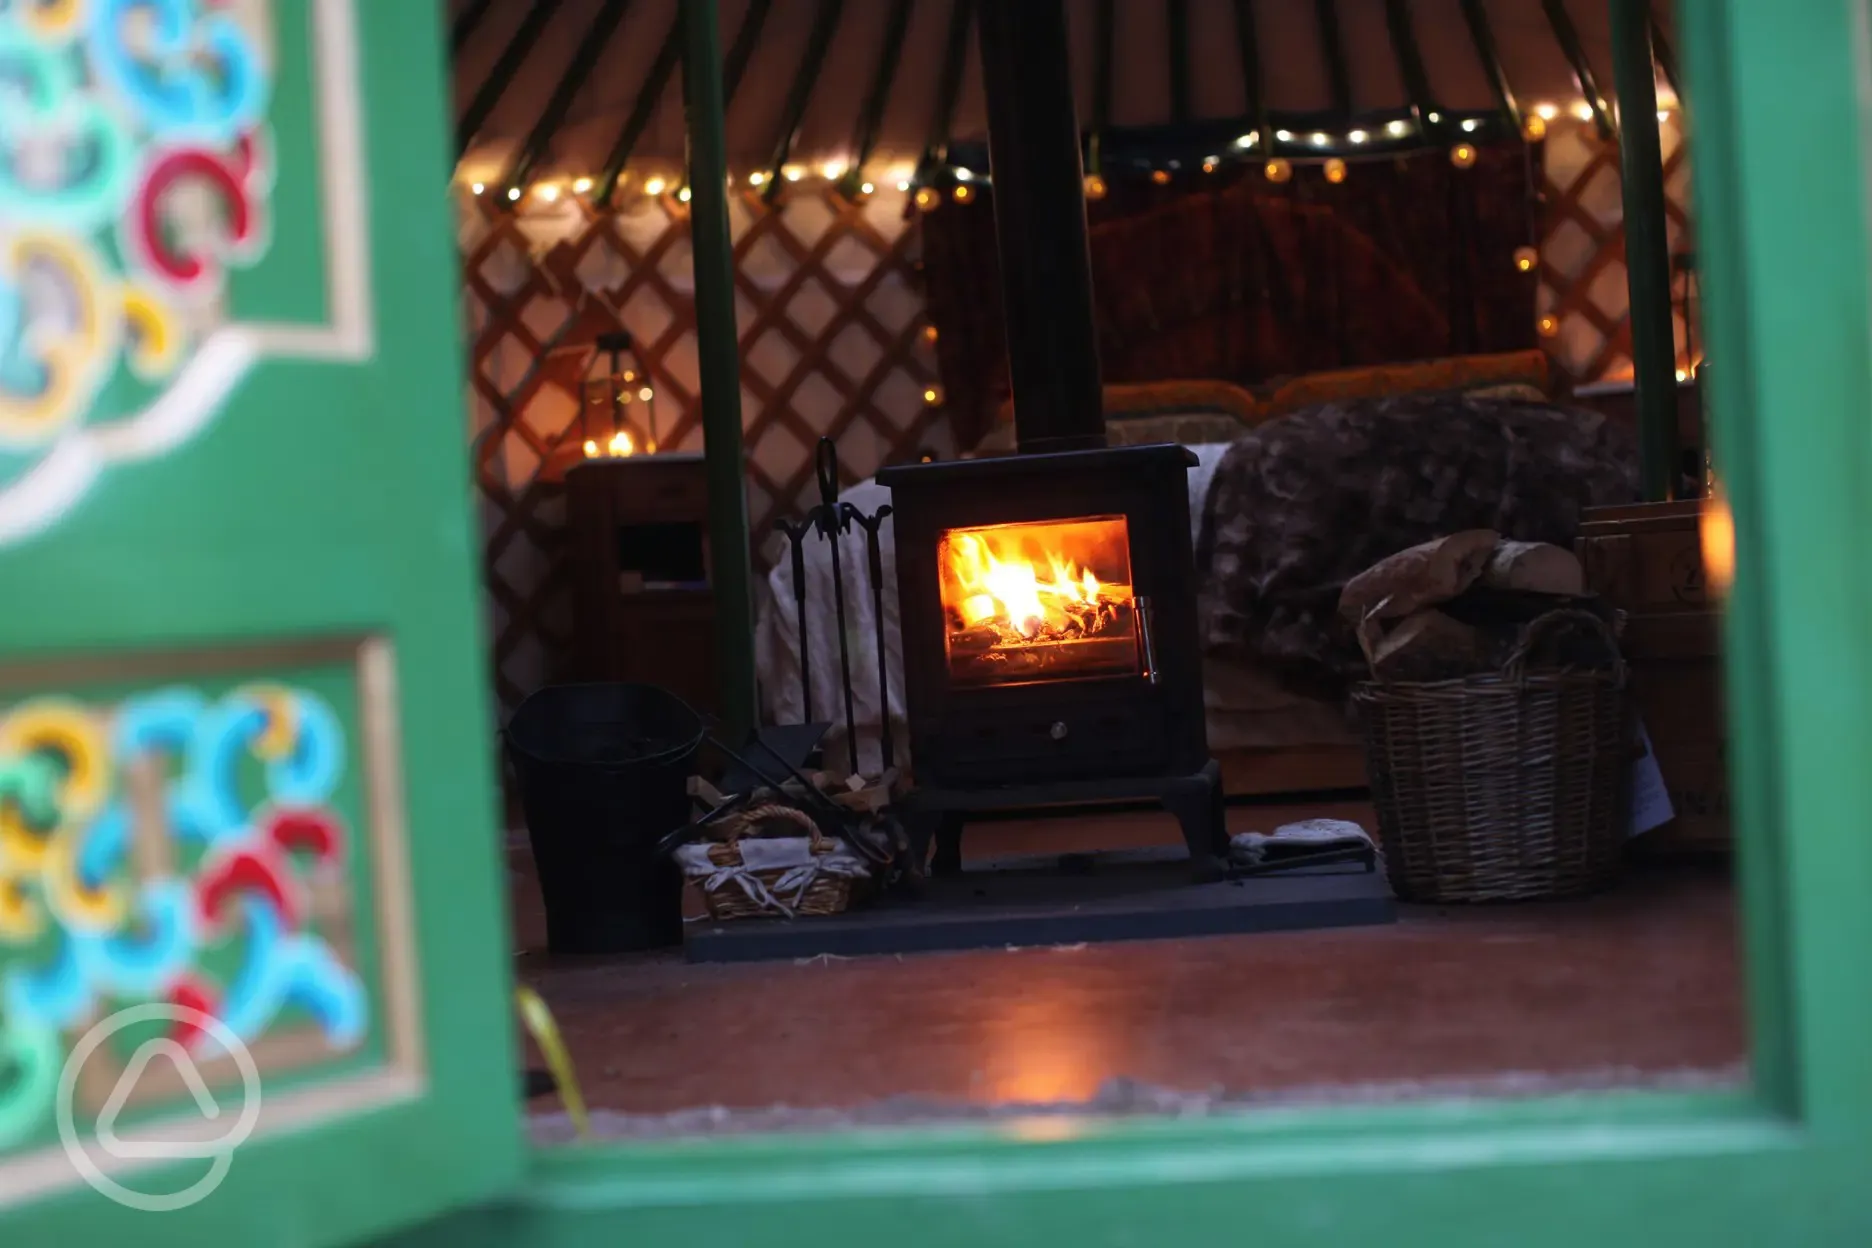 Cosy yurt for a winter break